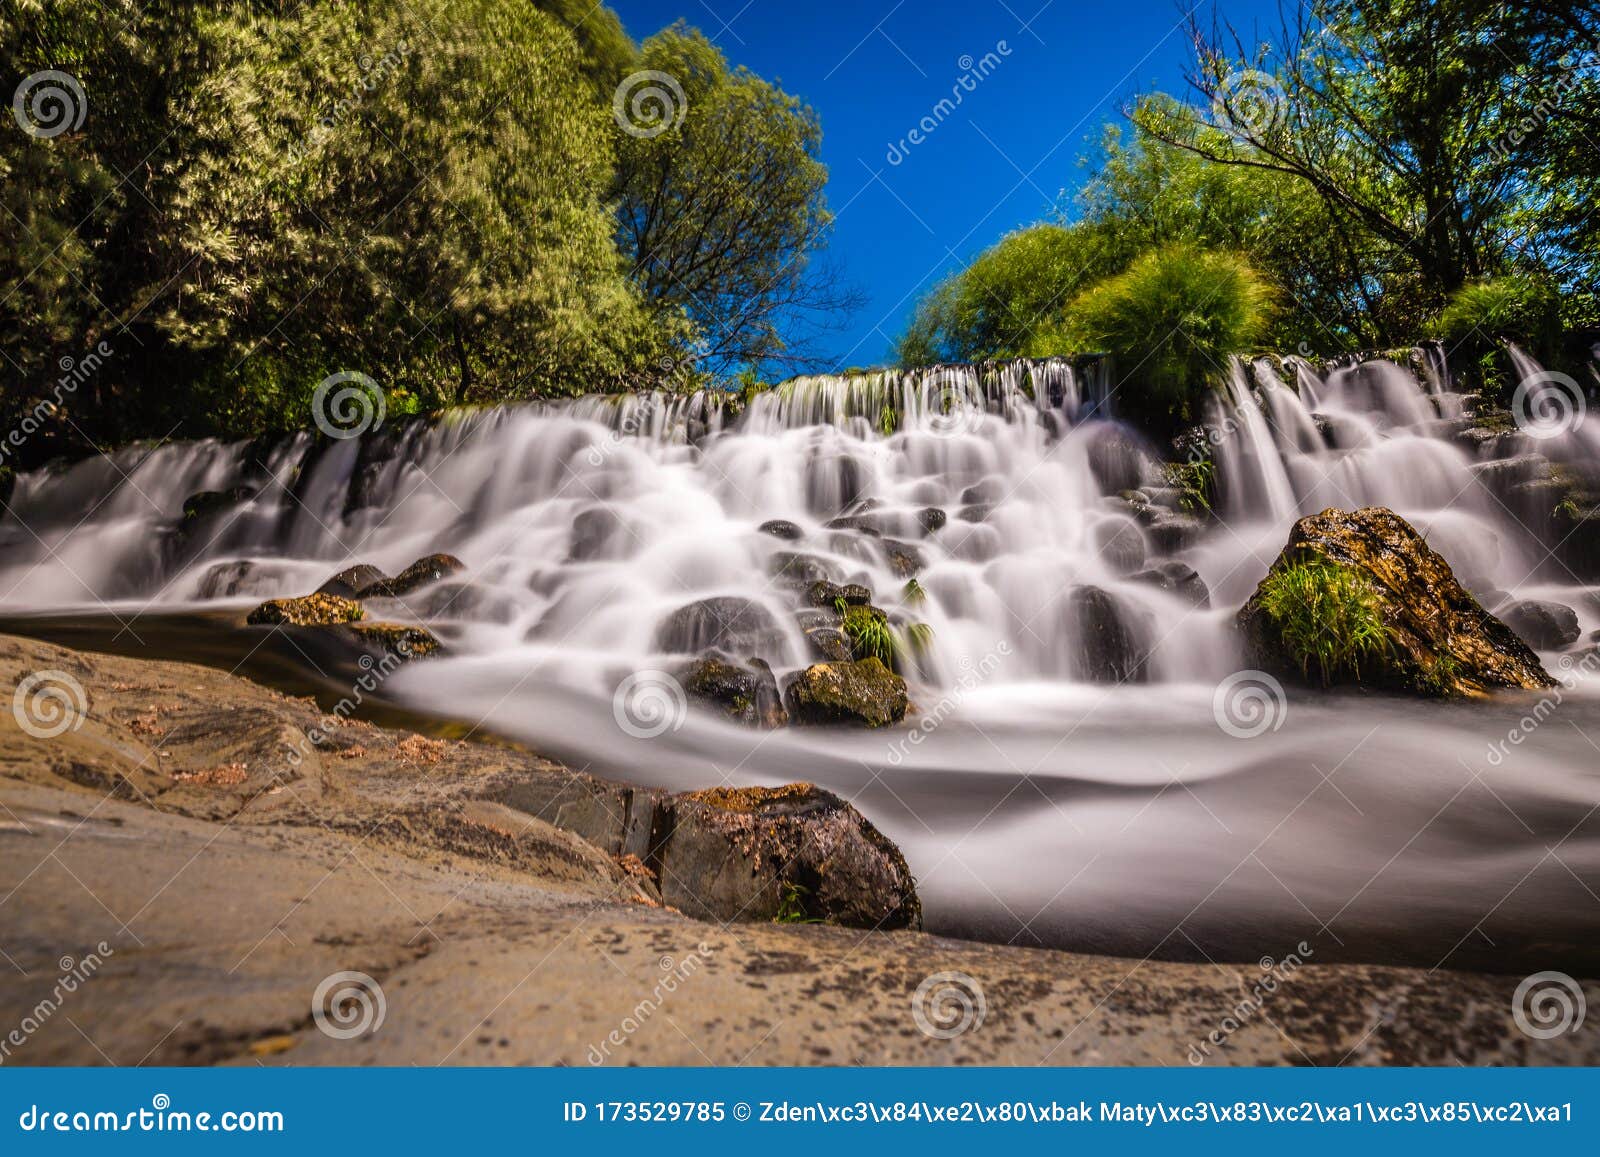 poco da broca waterfall - sierra estrella,portugal